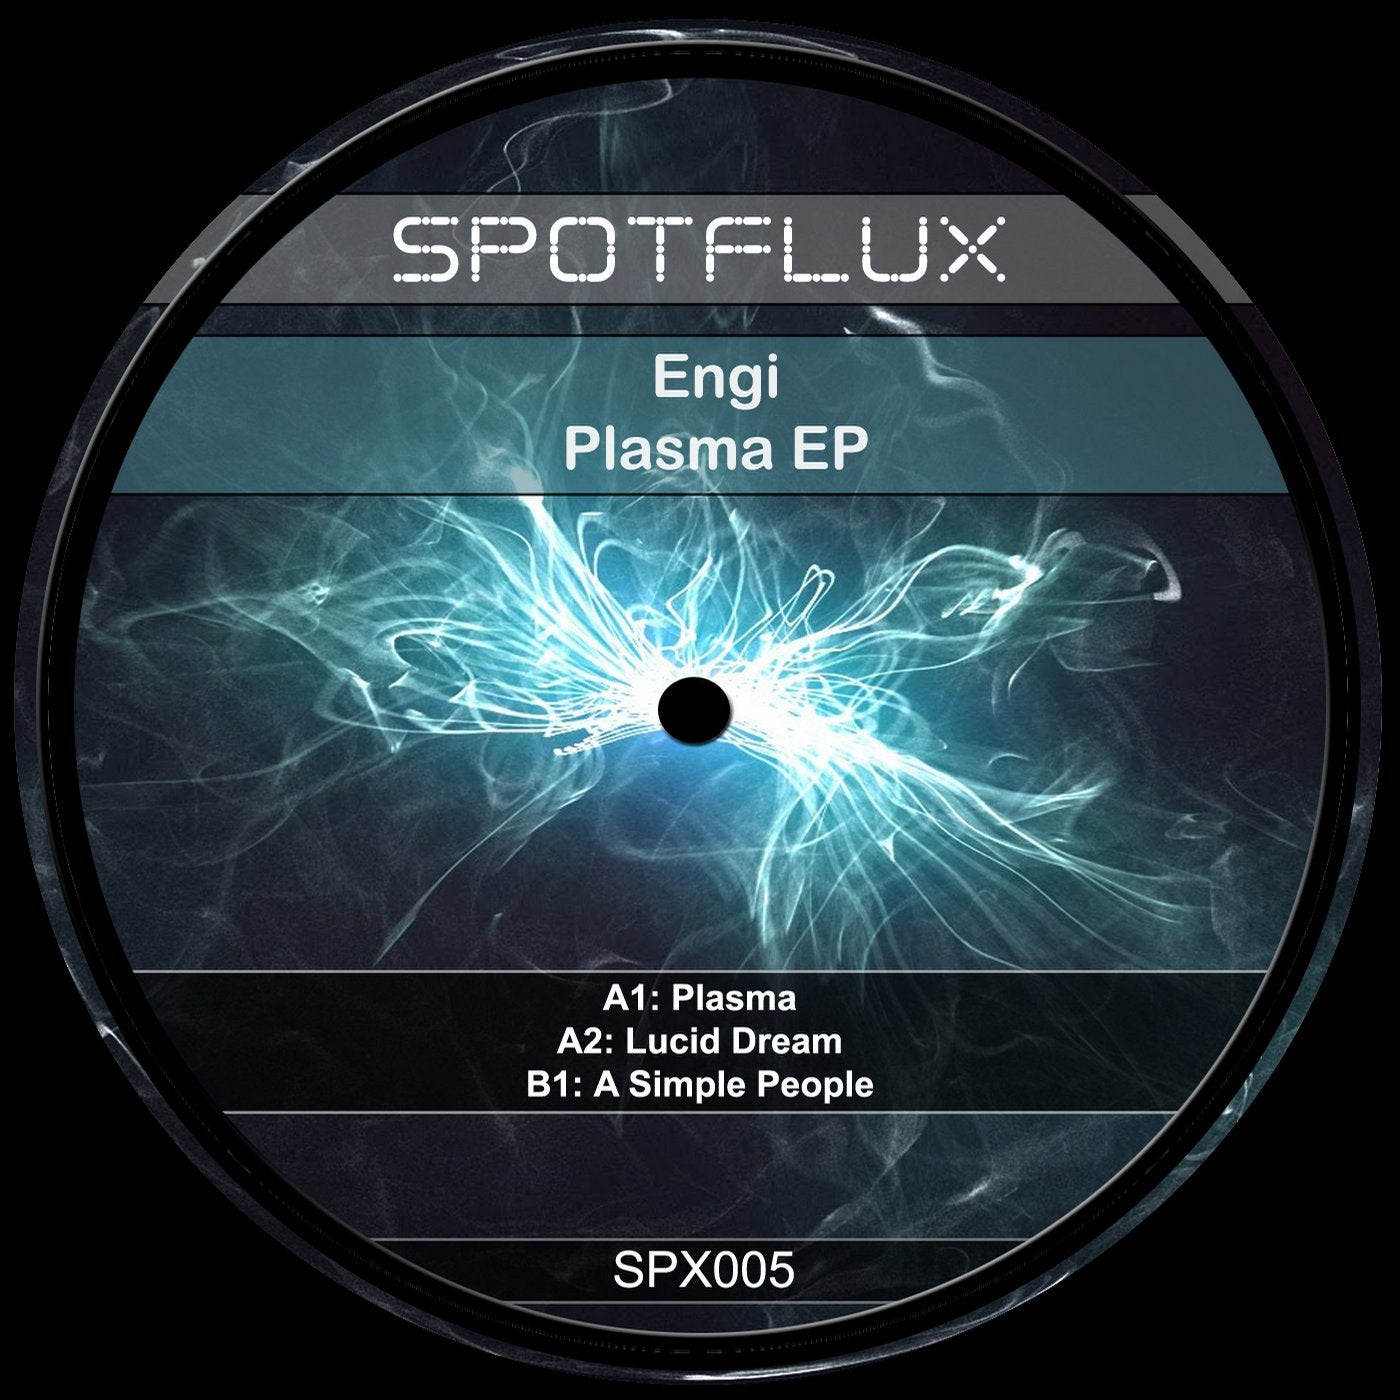 Plasma EP